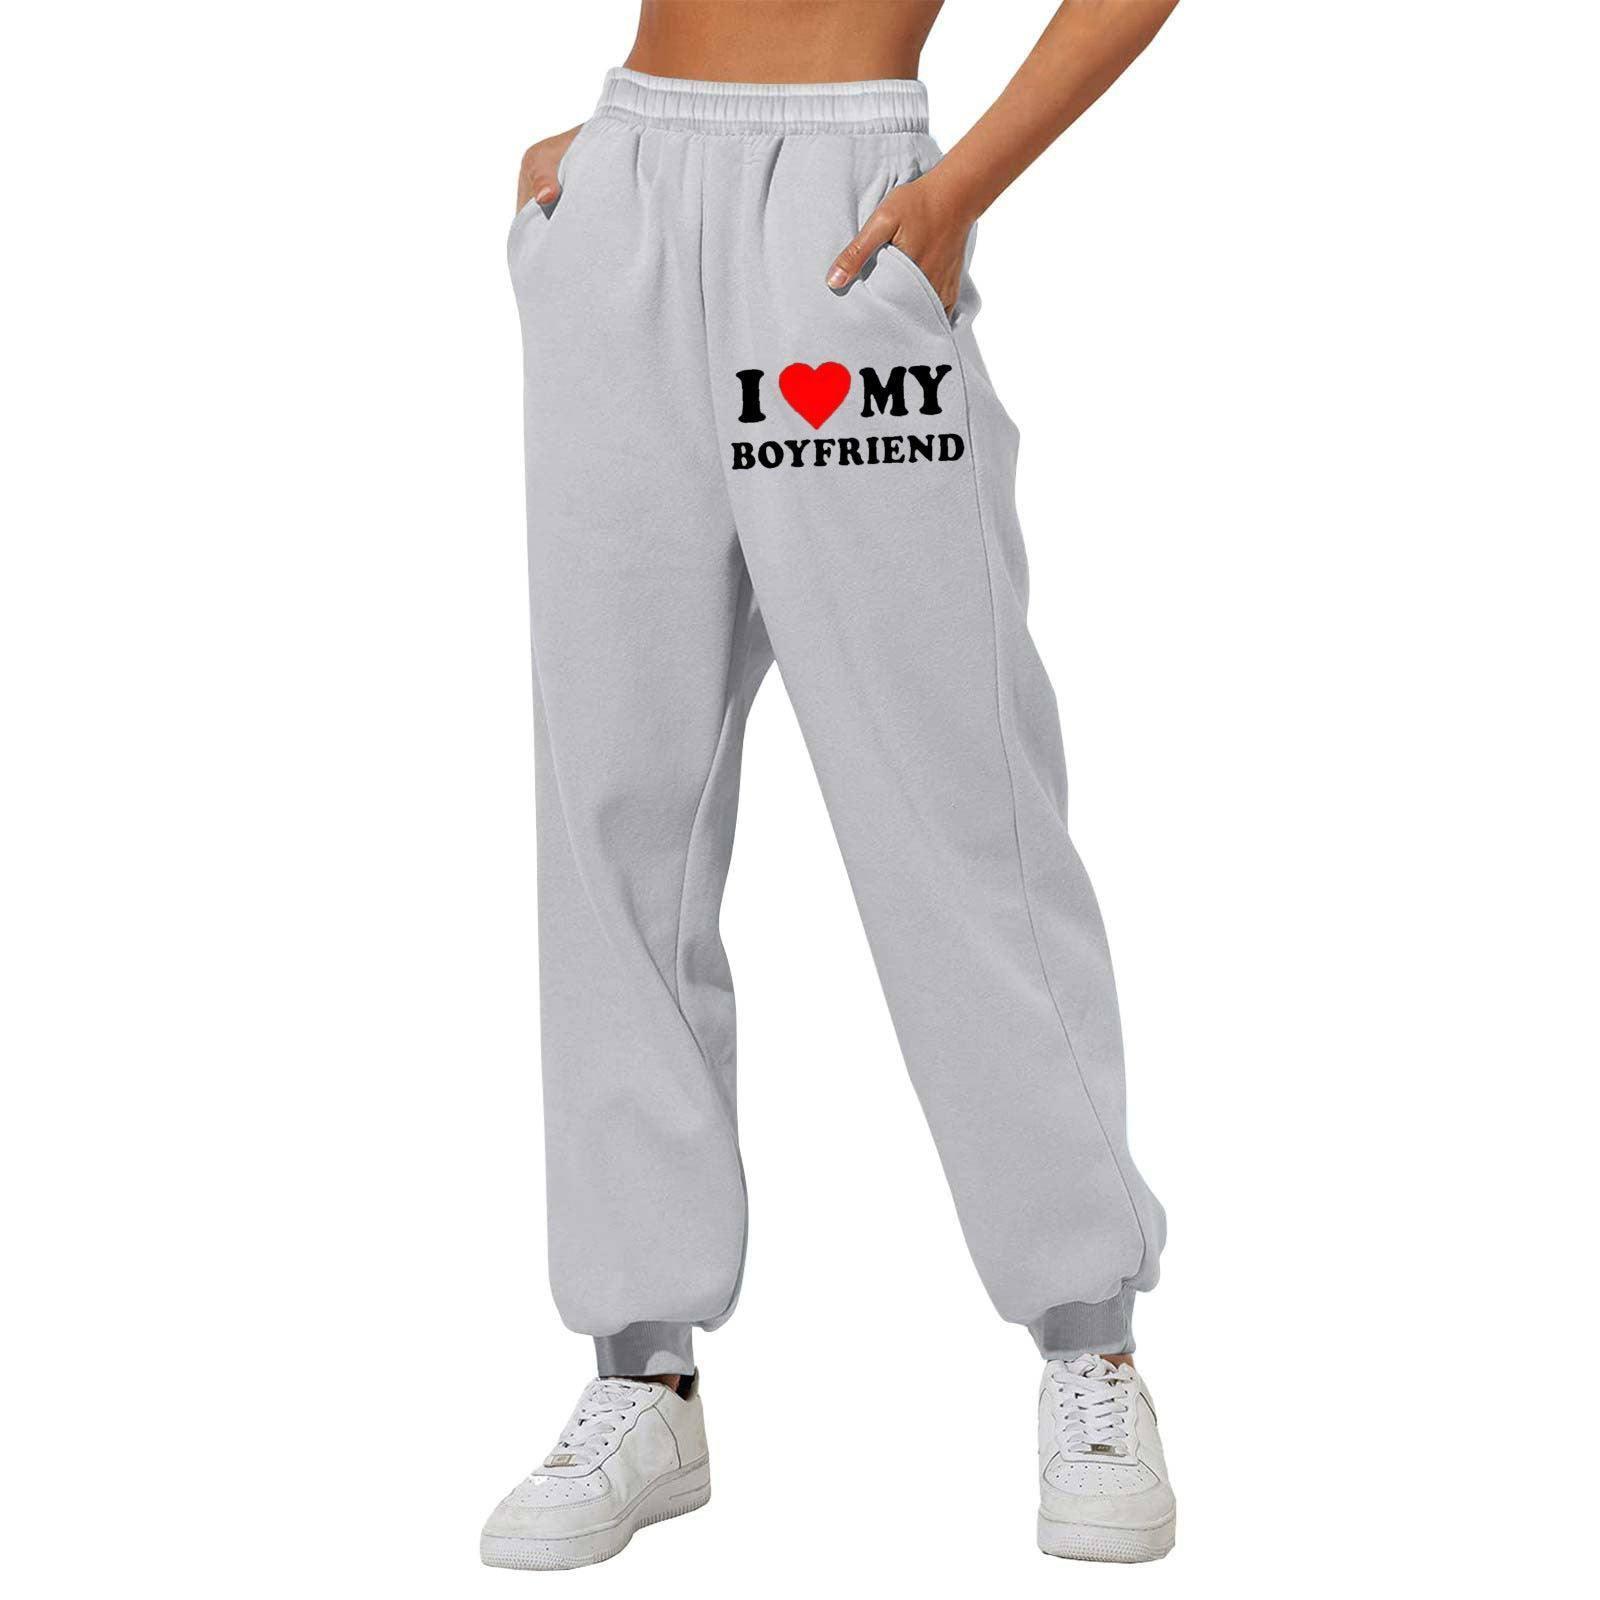 I Love MY BOYFRIEND Printed Trousers Casual Sweatpants Men-Gray front print-7